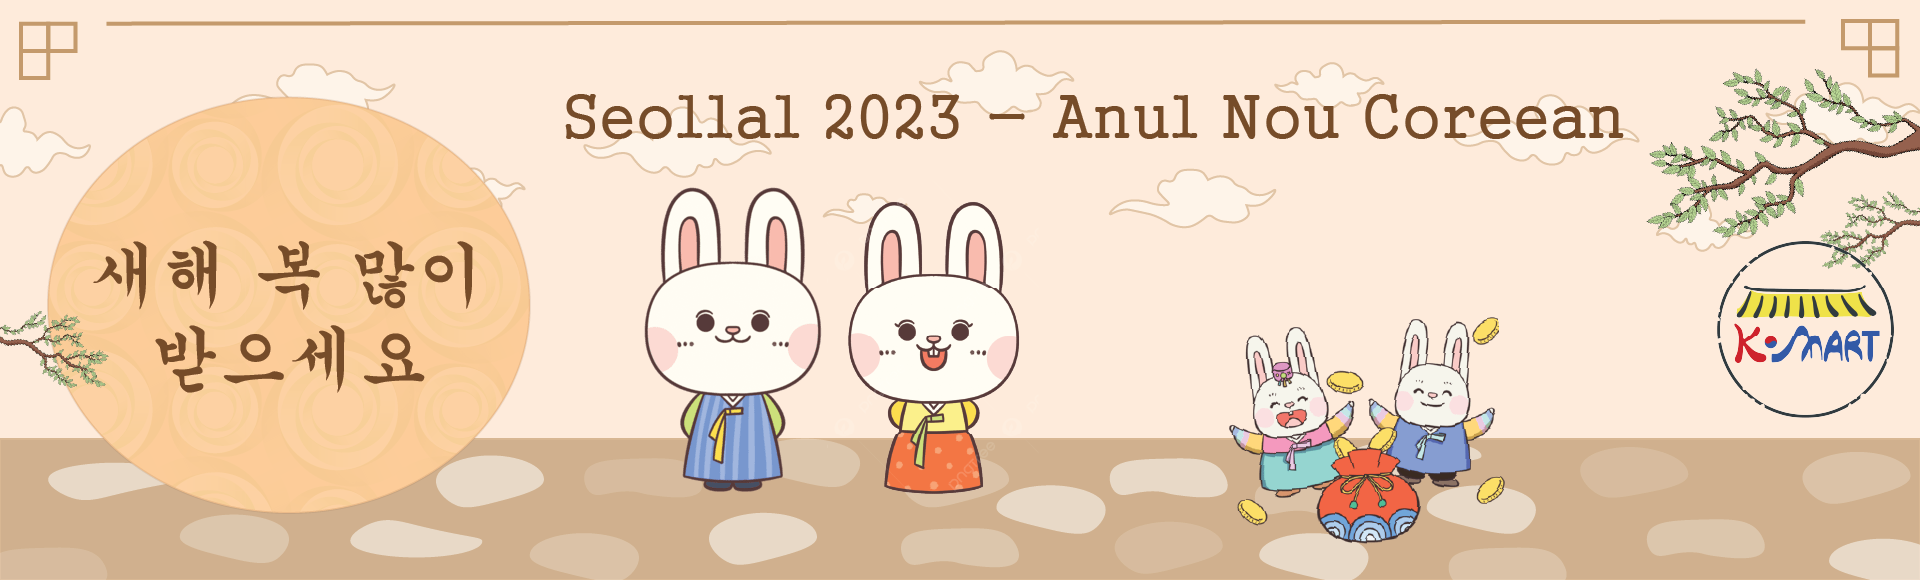 Seollal 2023 - Anul Nou Coreean